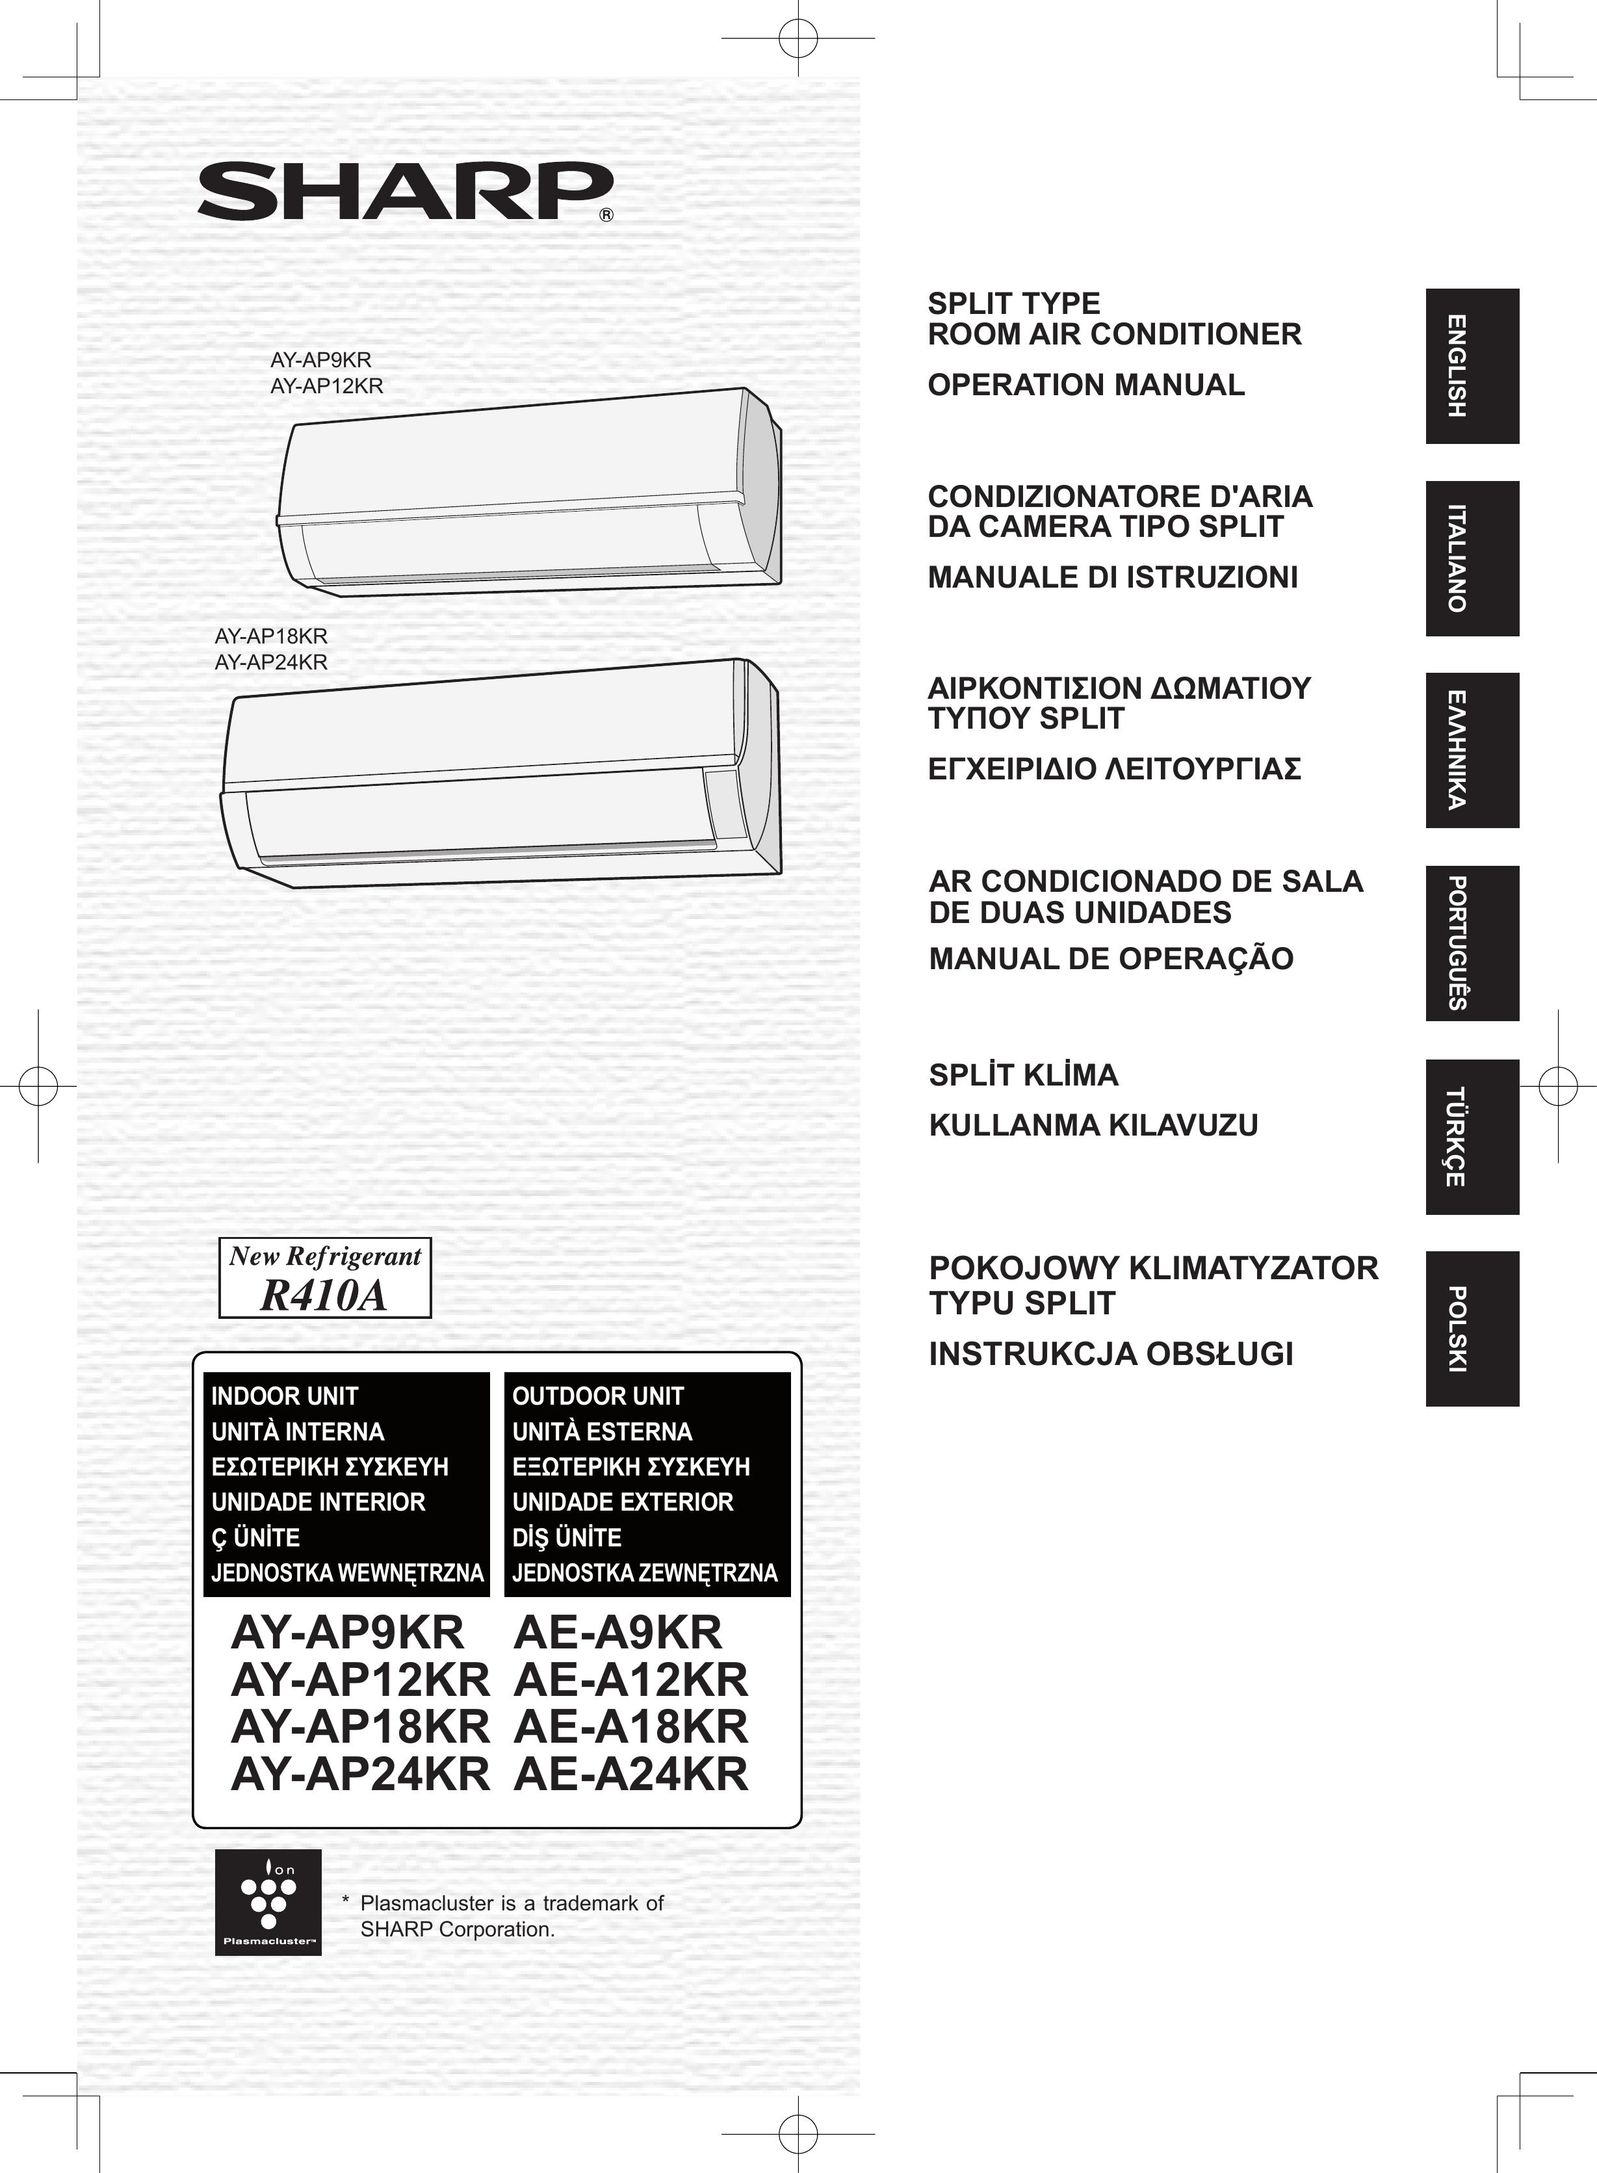 Sharp AE-A24KR Air Conditioner User Manual